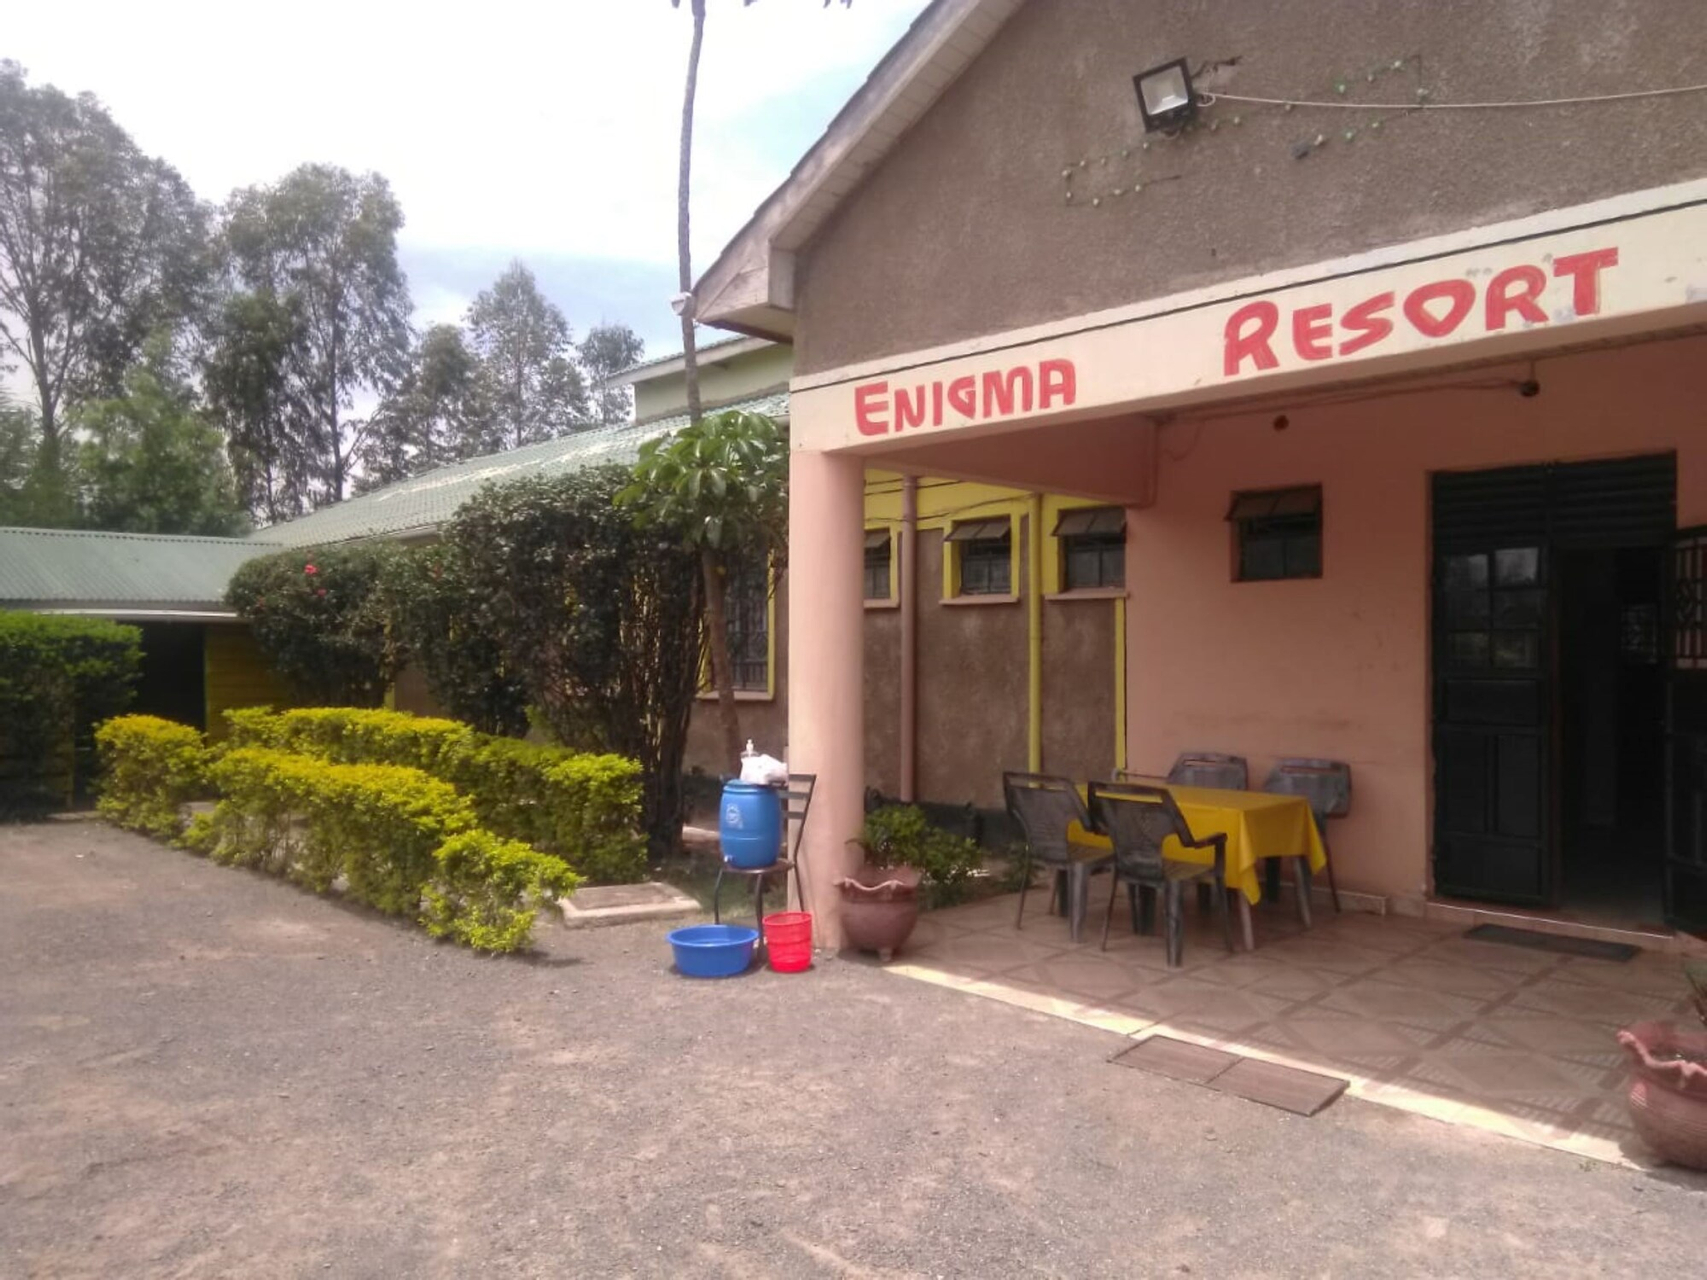 Enigma Resort, Kisumu East